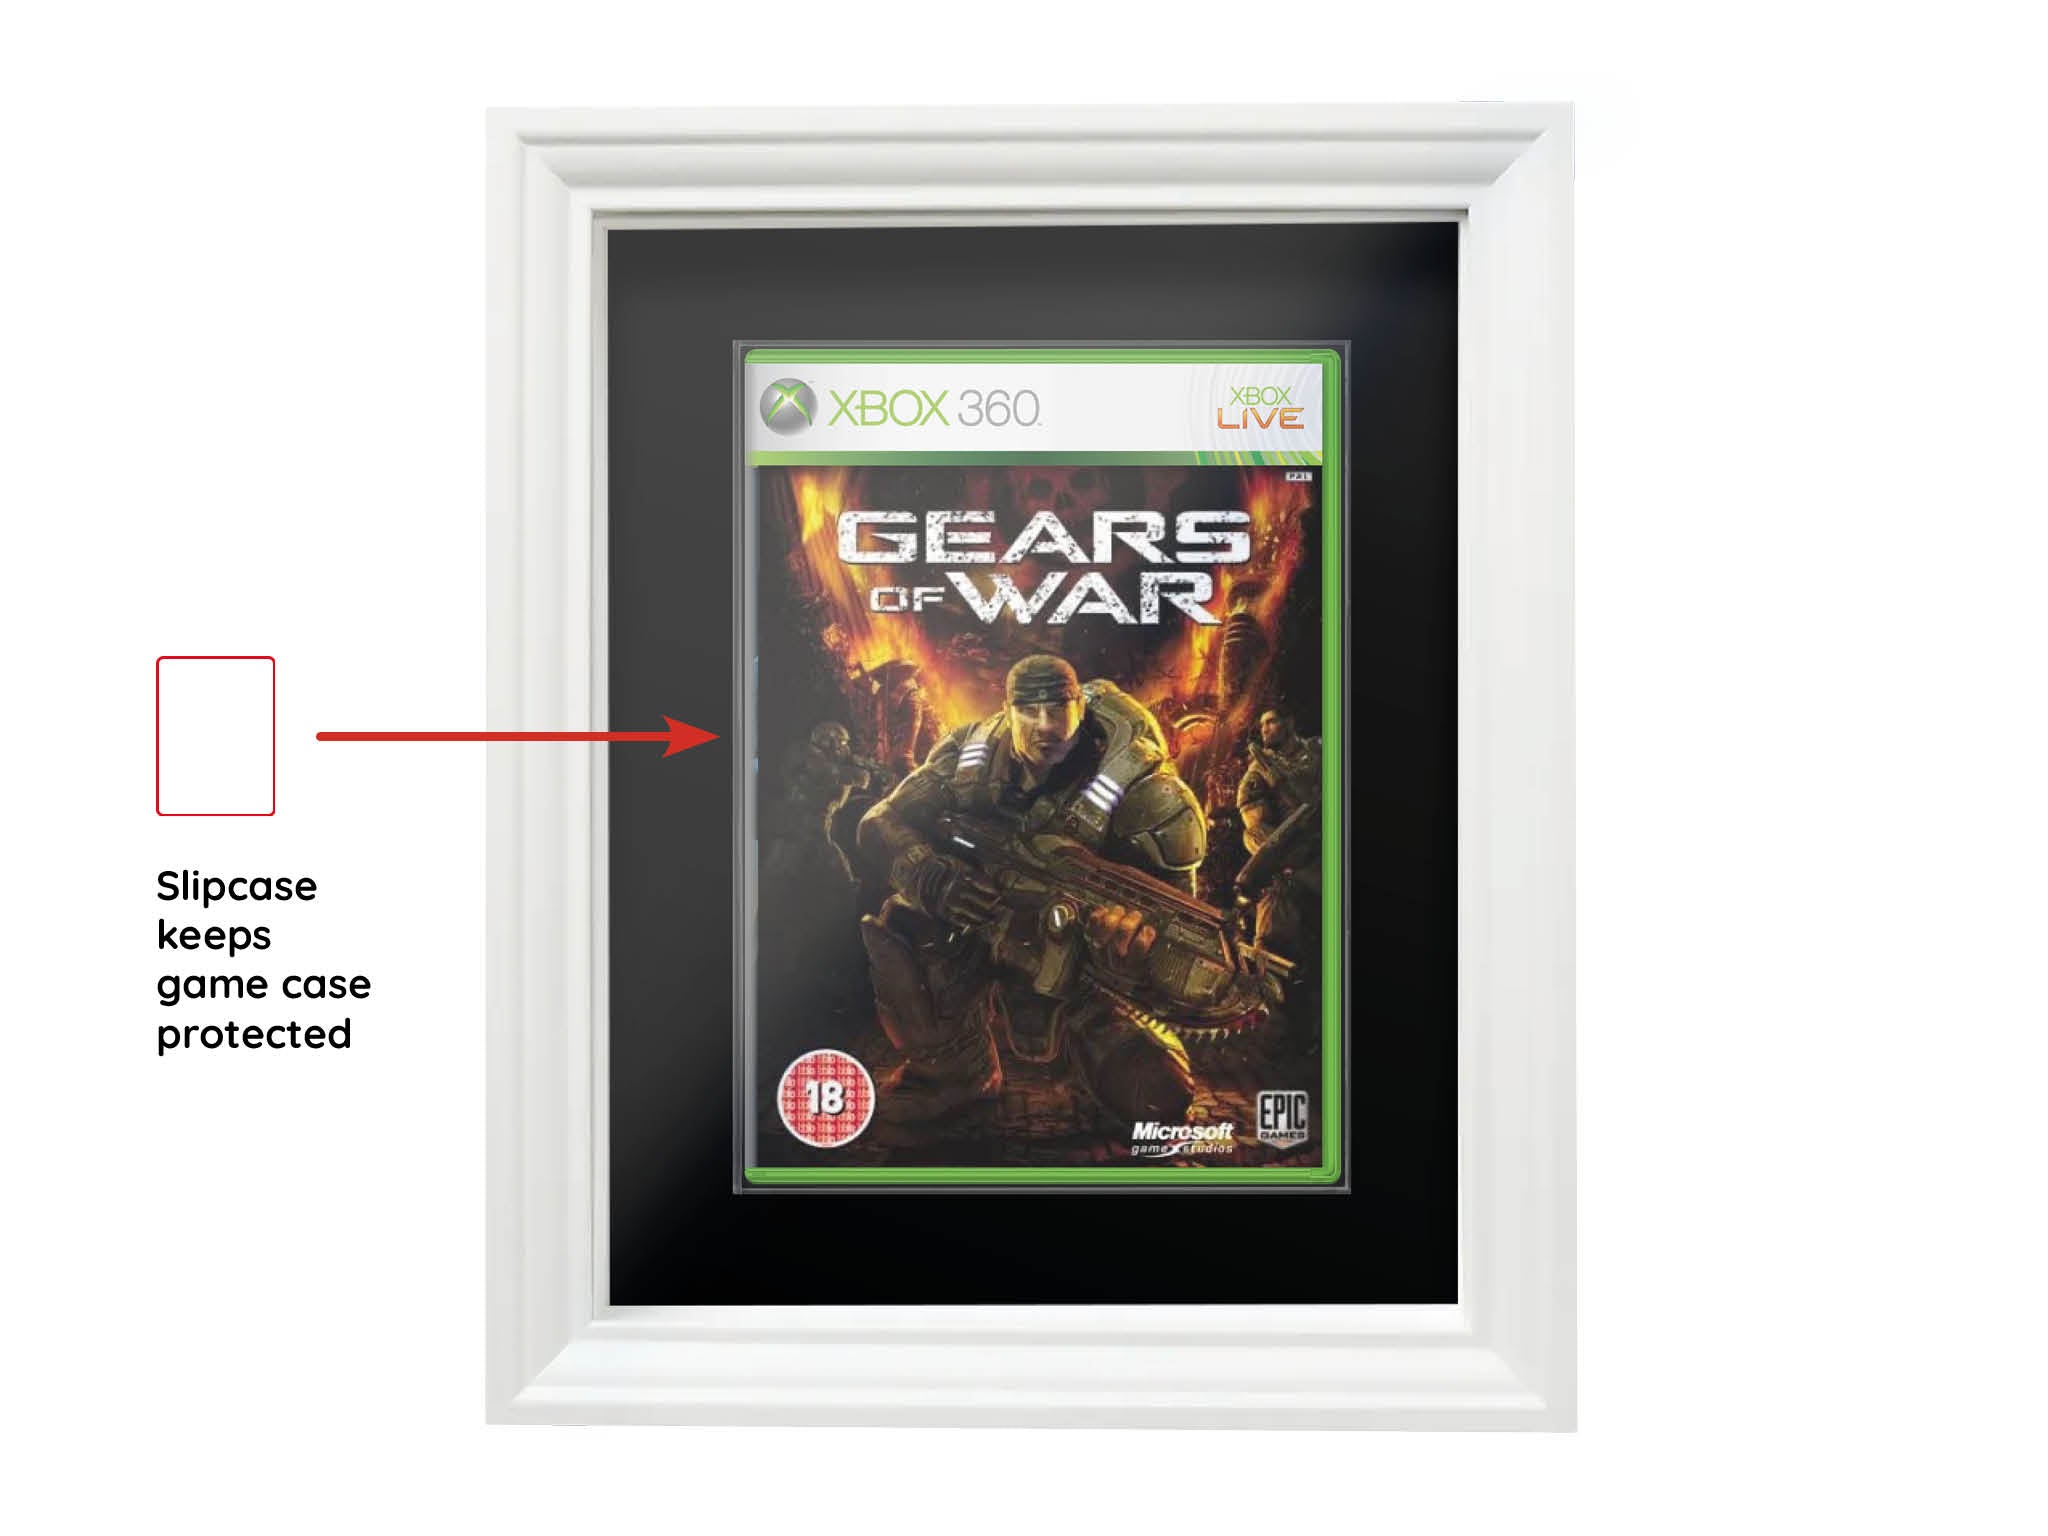 Gears of War (Showcase Range) Framed Game - Frame-A-Game